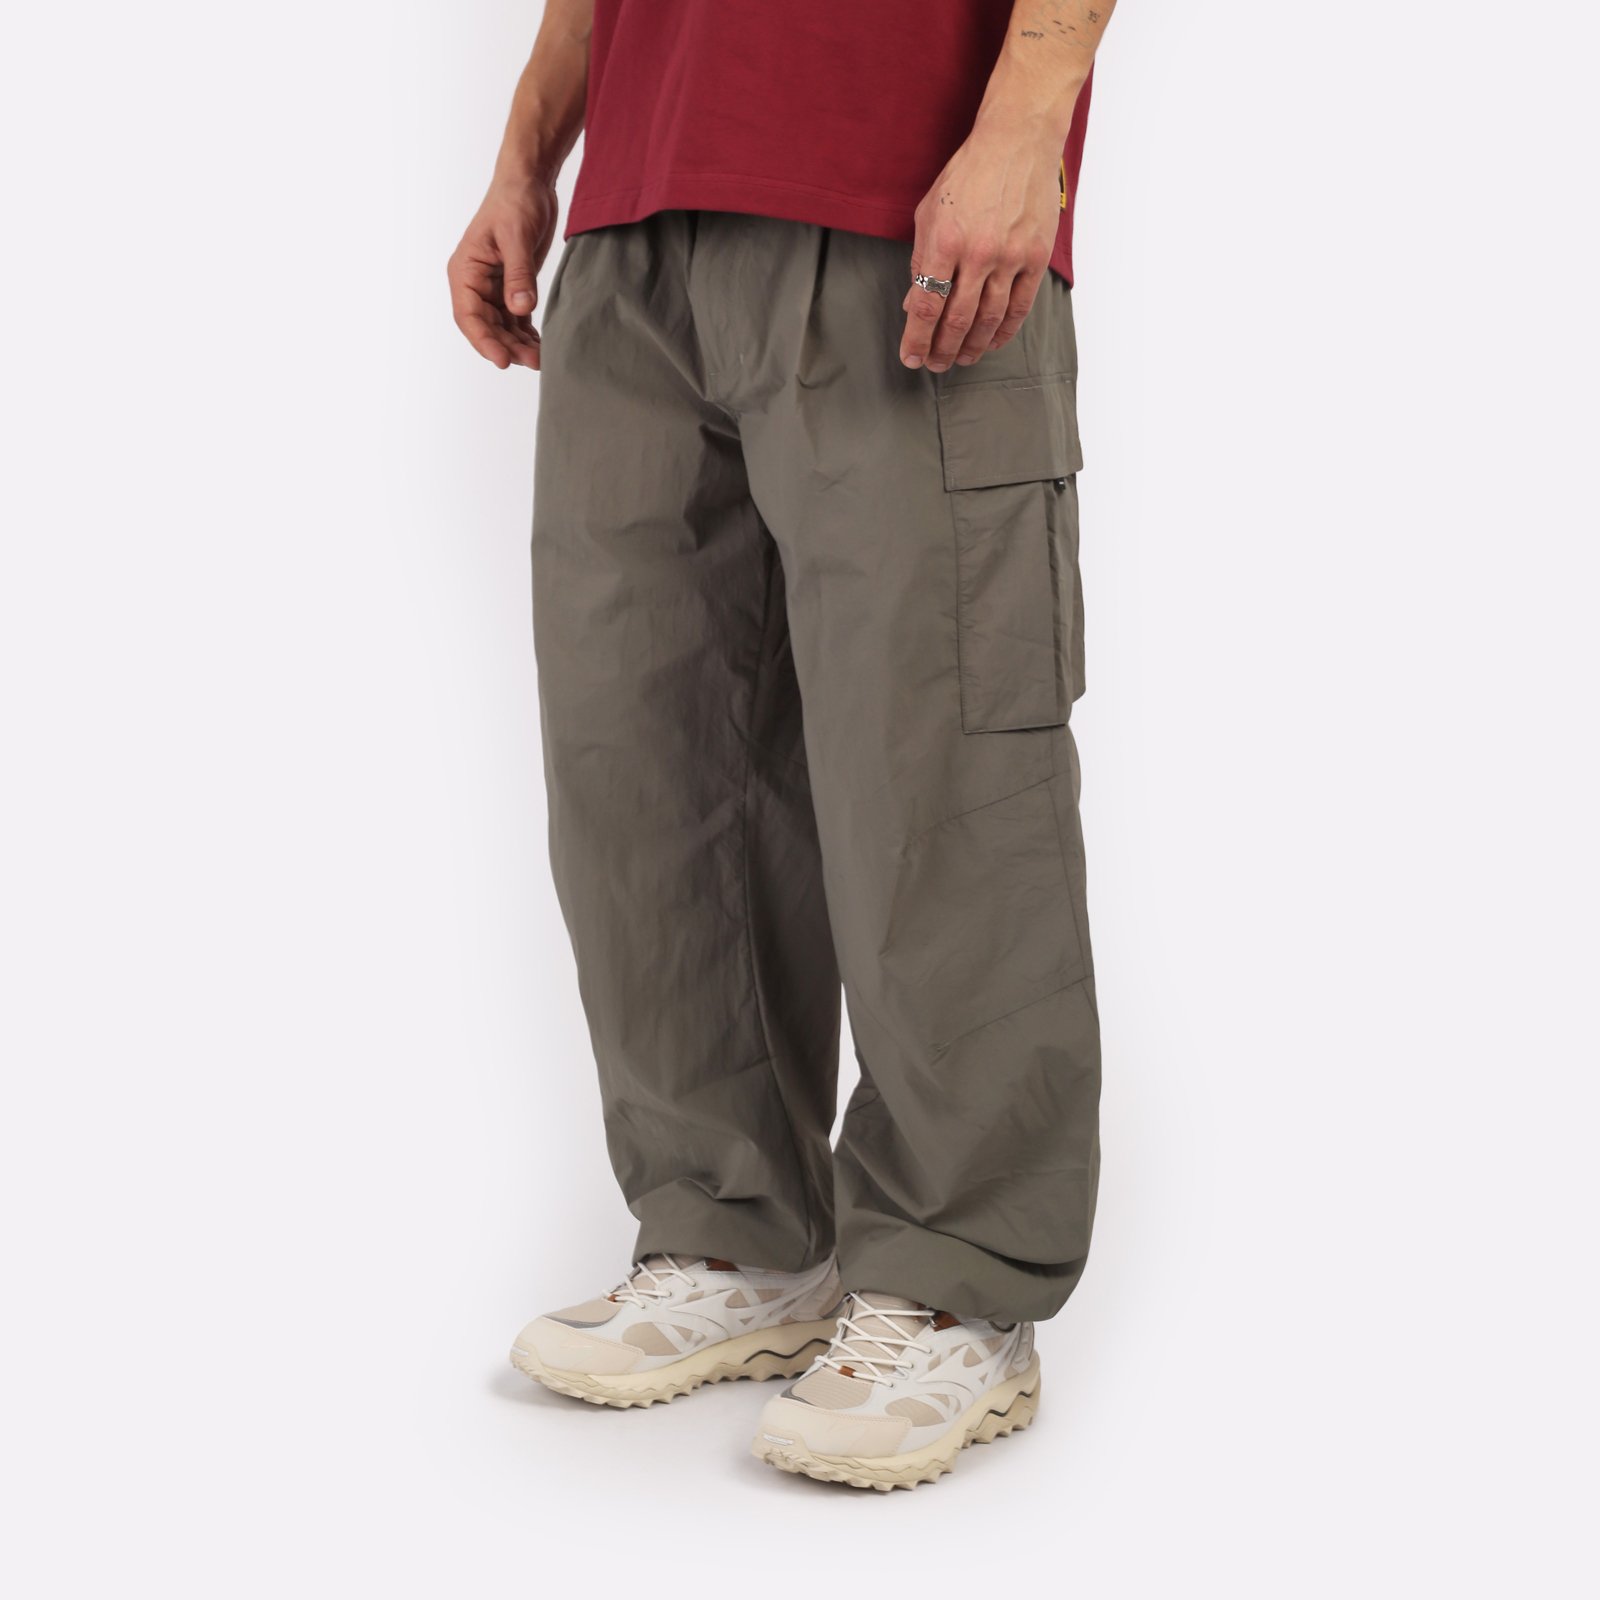 мужские серые брюки KRAKATAU Rm176-52 Rm176-52-елово-сер - цена, описание, фото 3